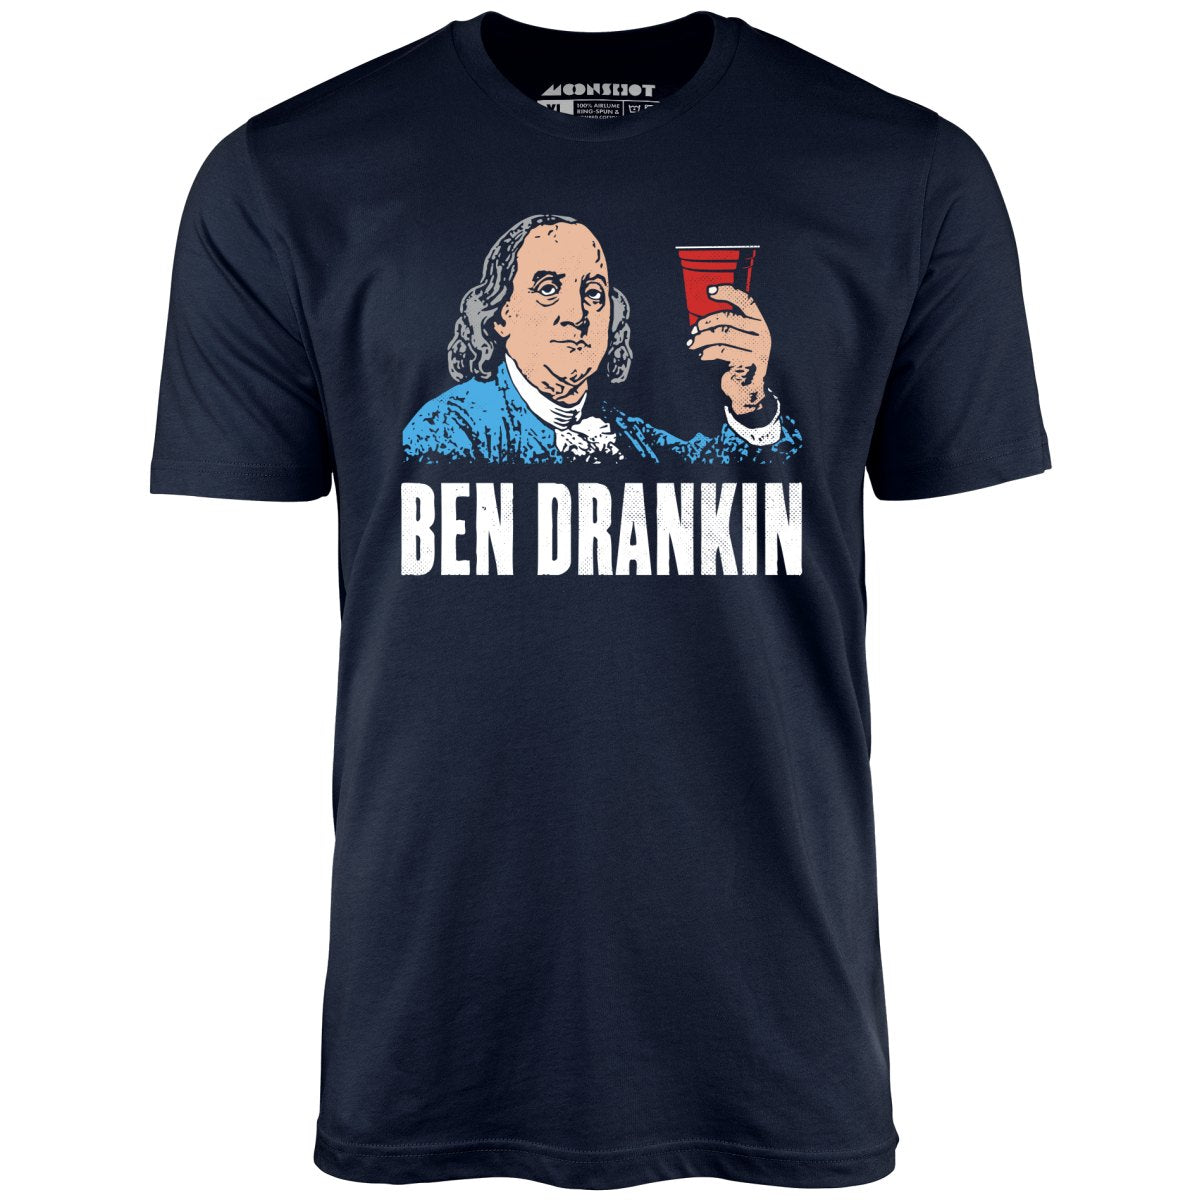 Ben Drankin - Unisex T-Shirt